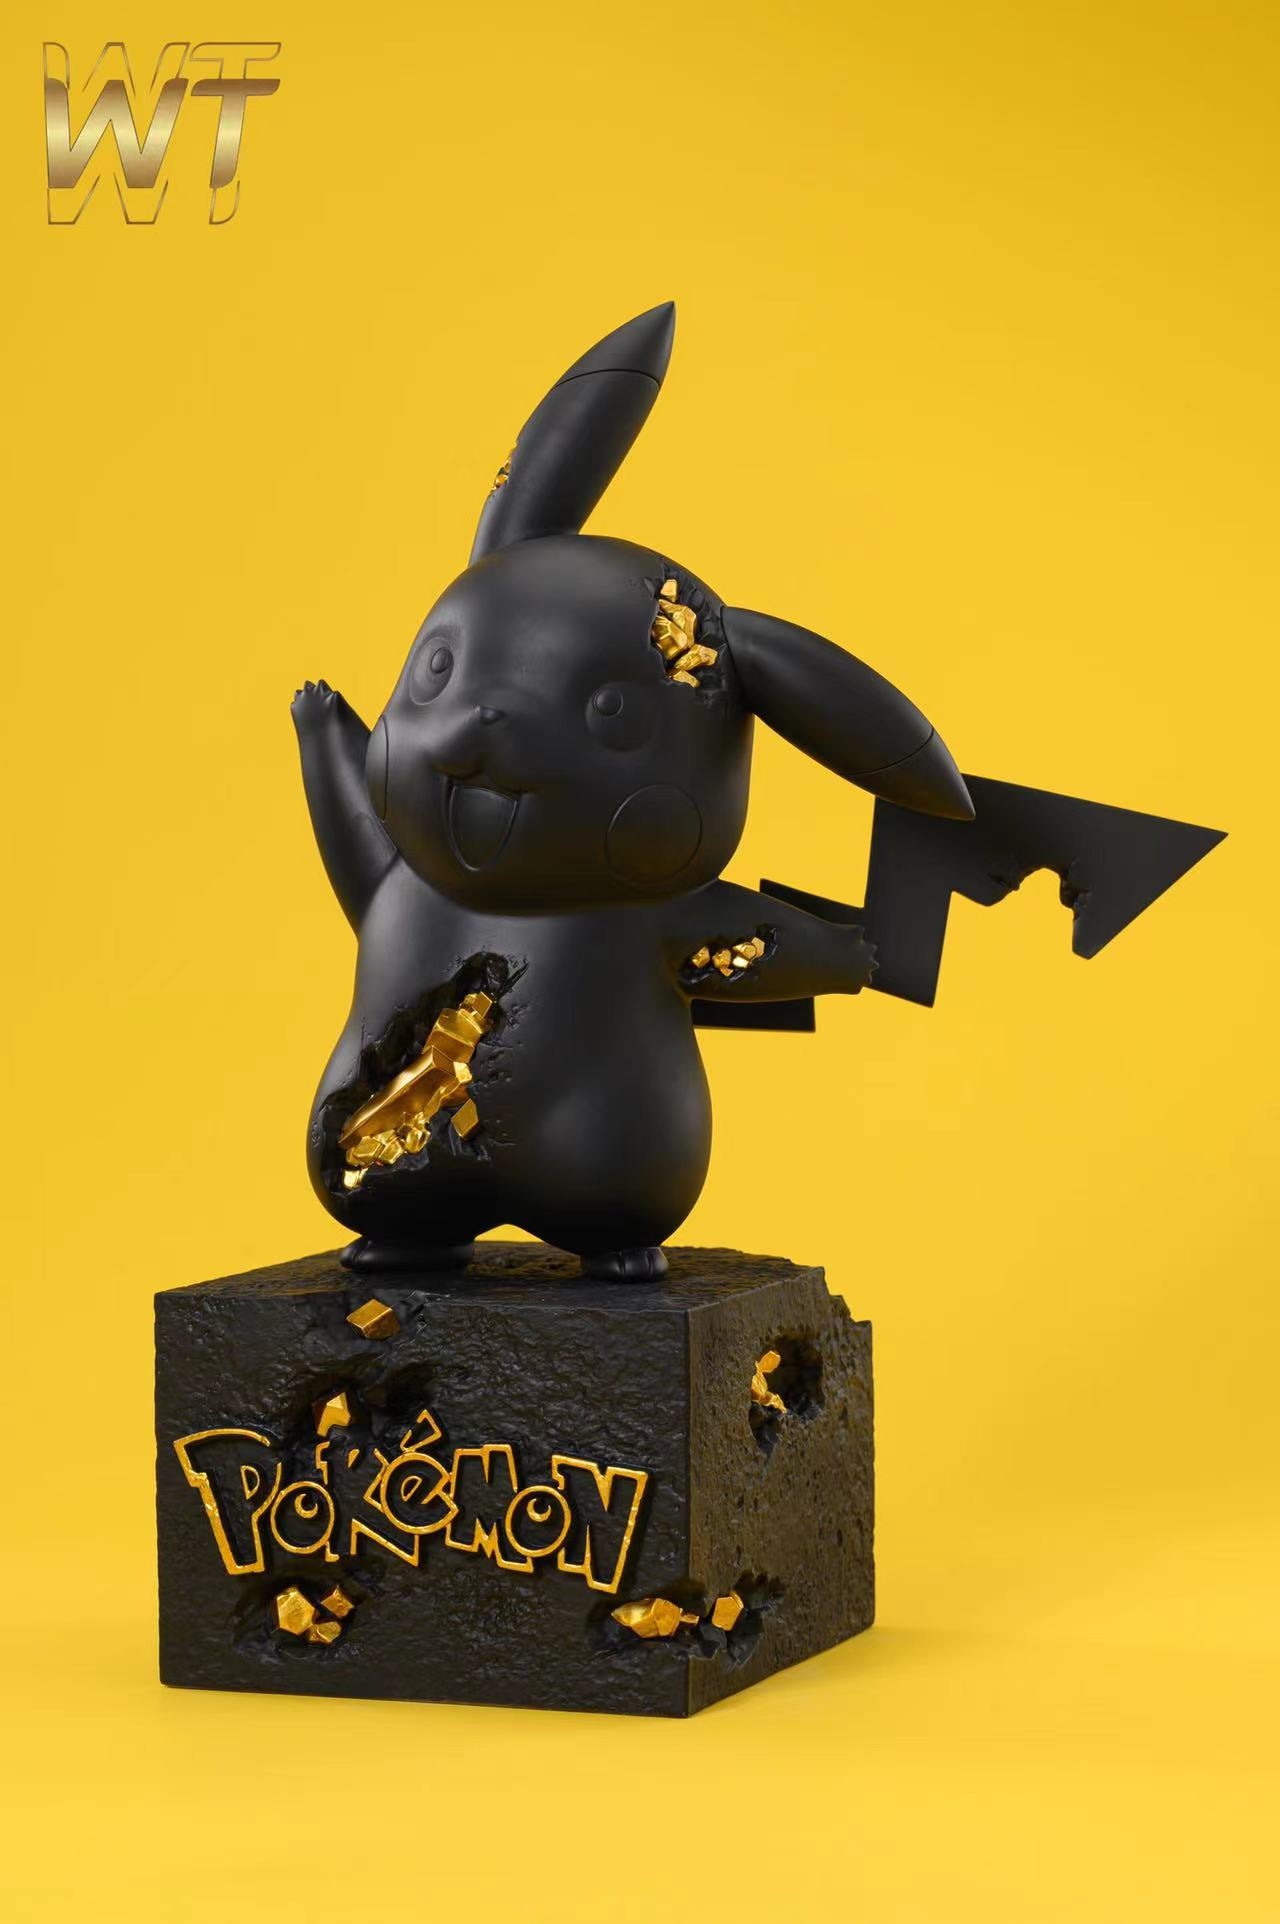 〖Sold Out〗Pokémon Peripheral Products Corrosion Pokémon Pikachu  - WT Studio